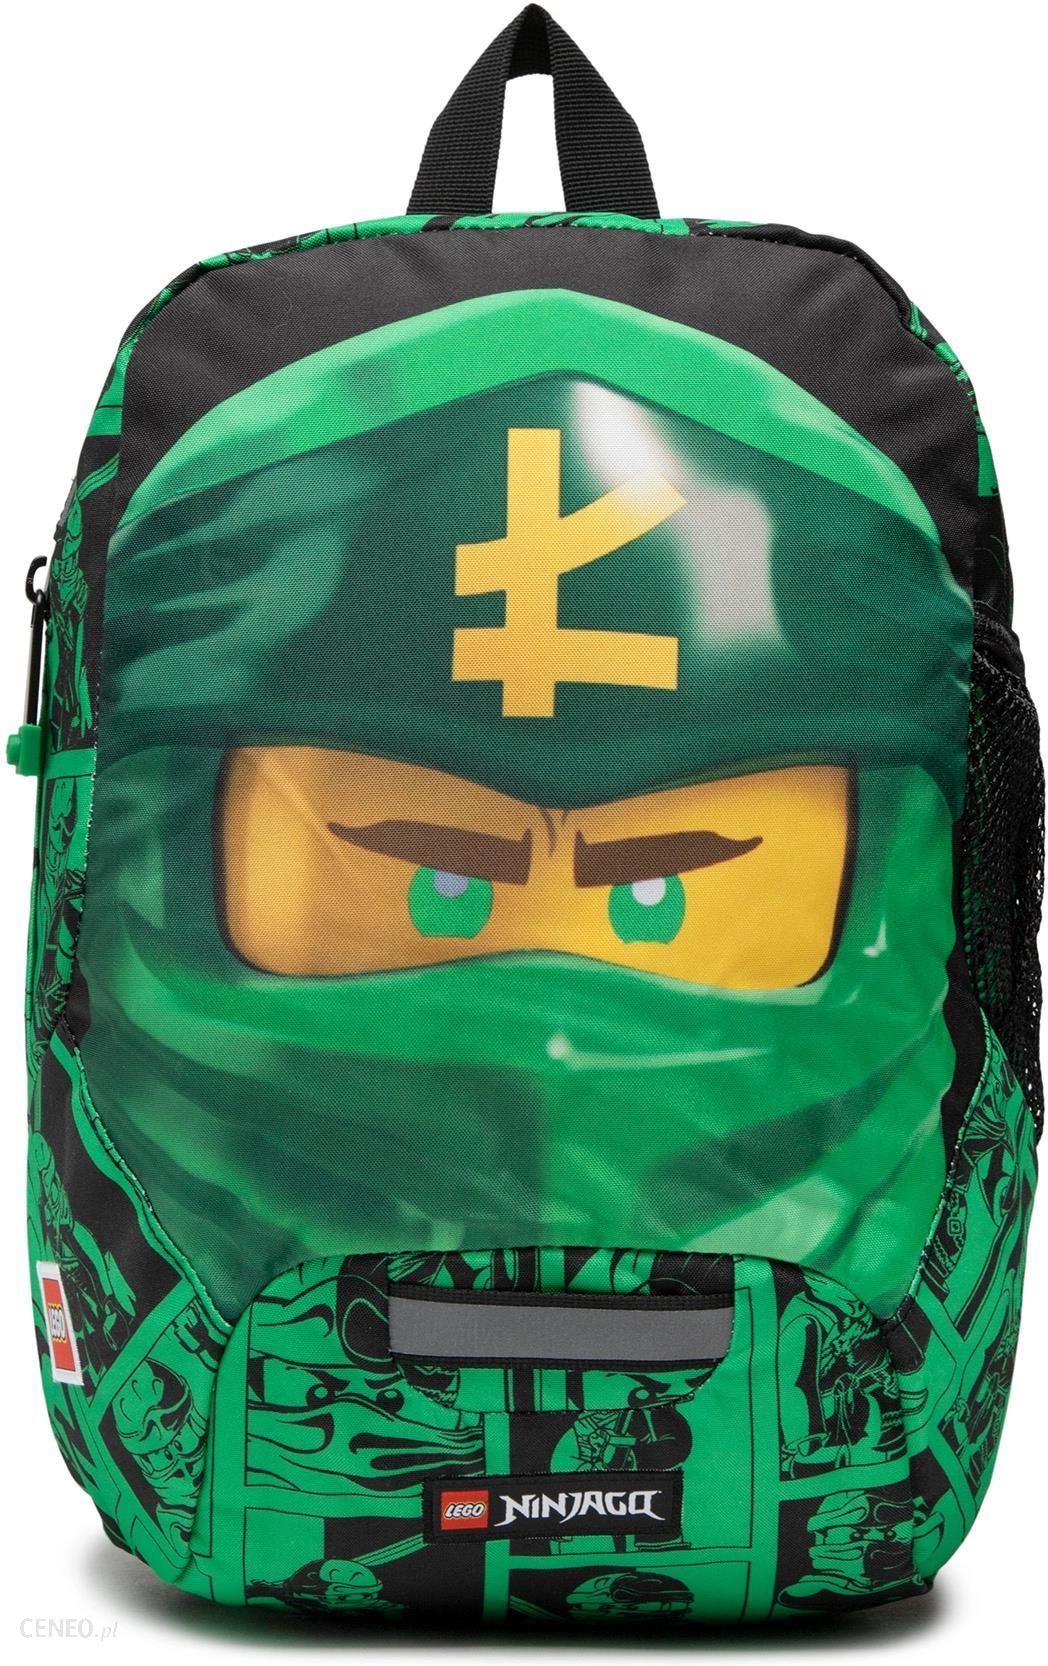 LEGO -GPL20222-2201 Ninja School Backpack, Green and Black (GPL Bags  GPL20222-2201)